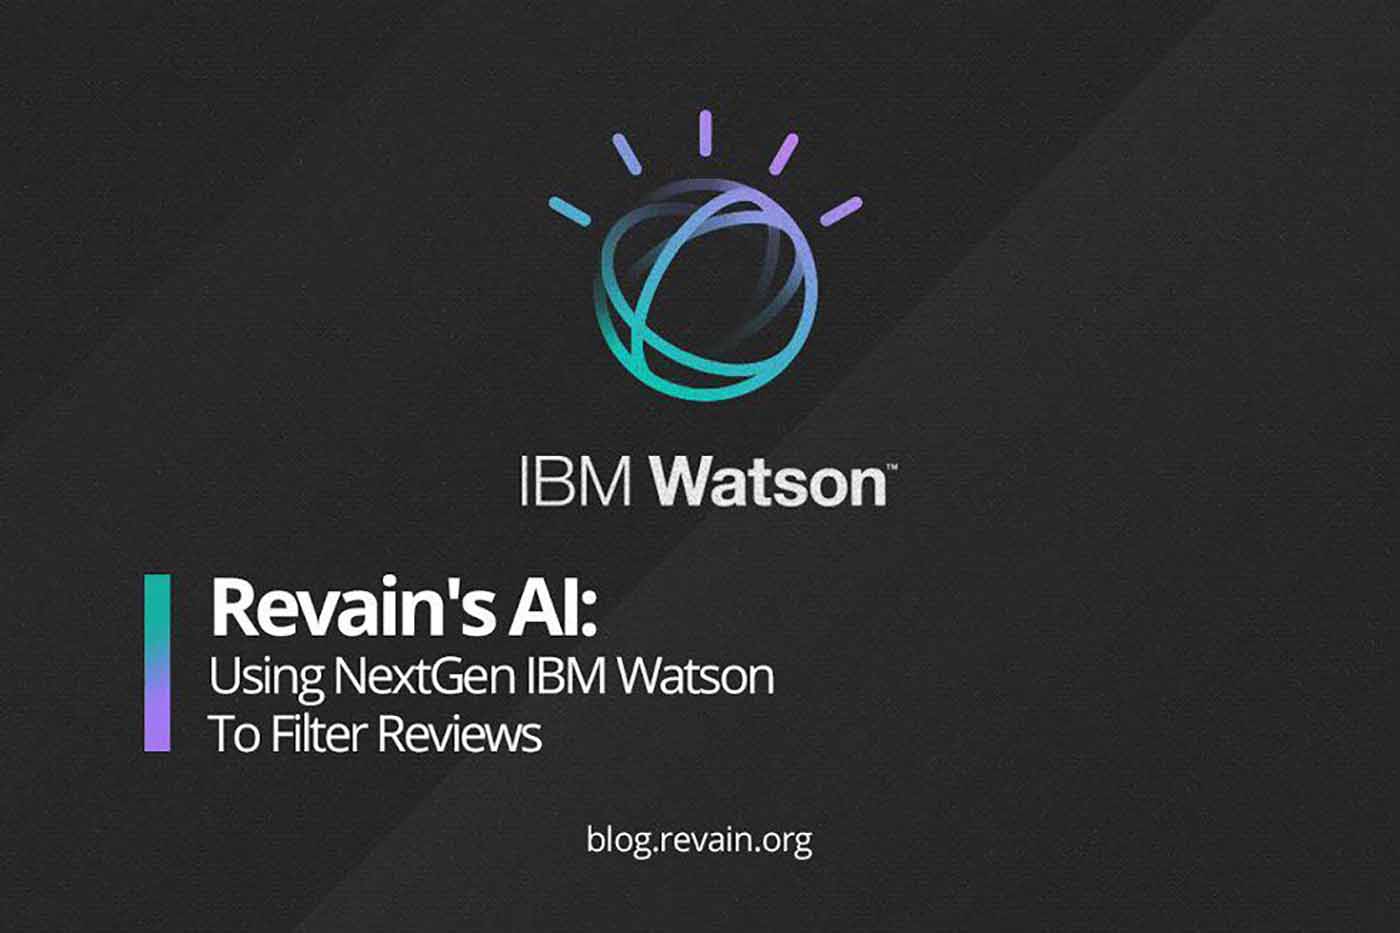 Article Revain's AI: Using NextGen IBM Watson To Filter Reviews